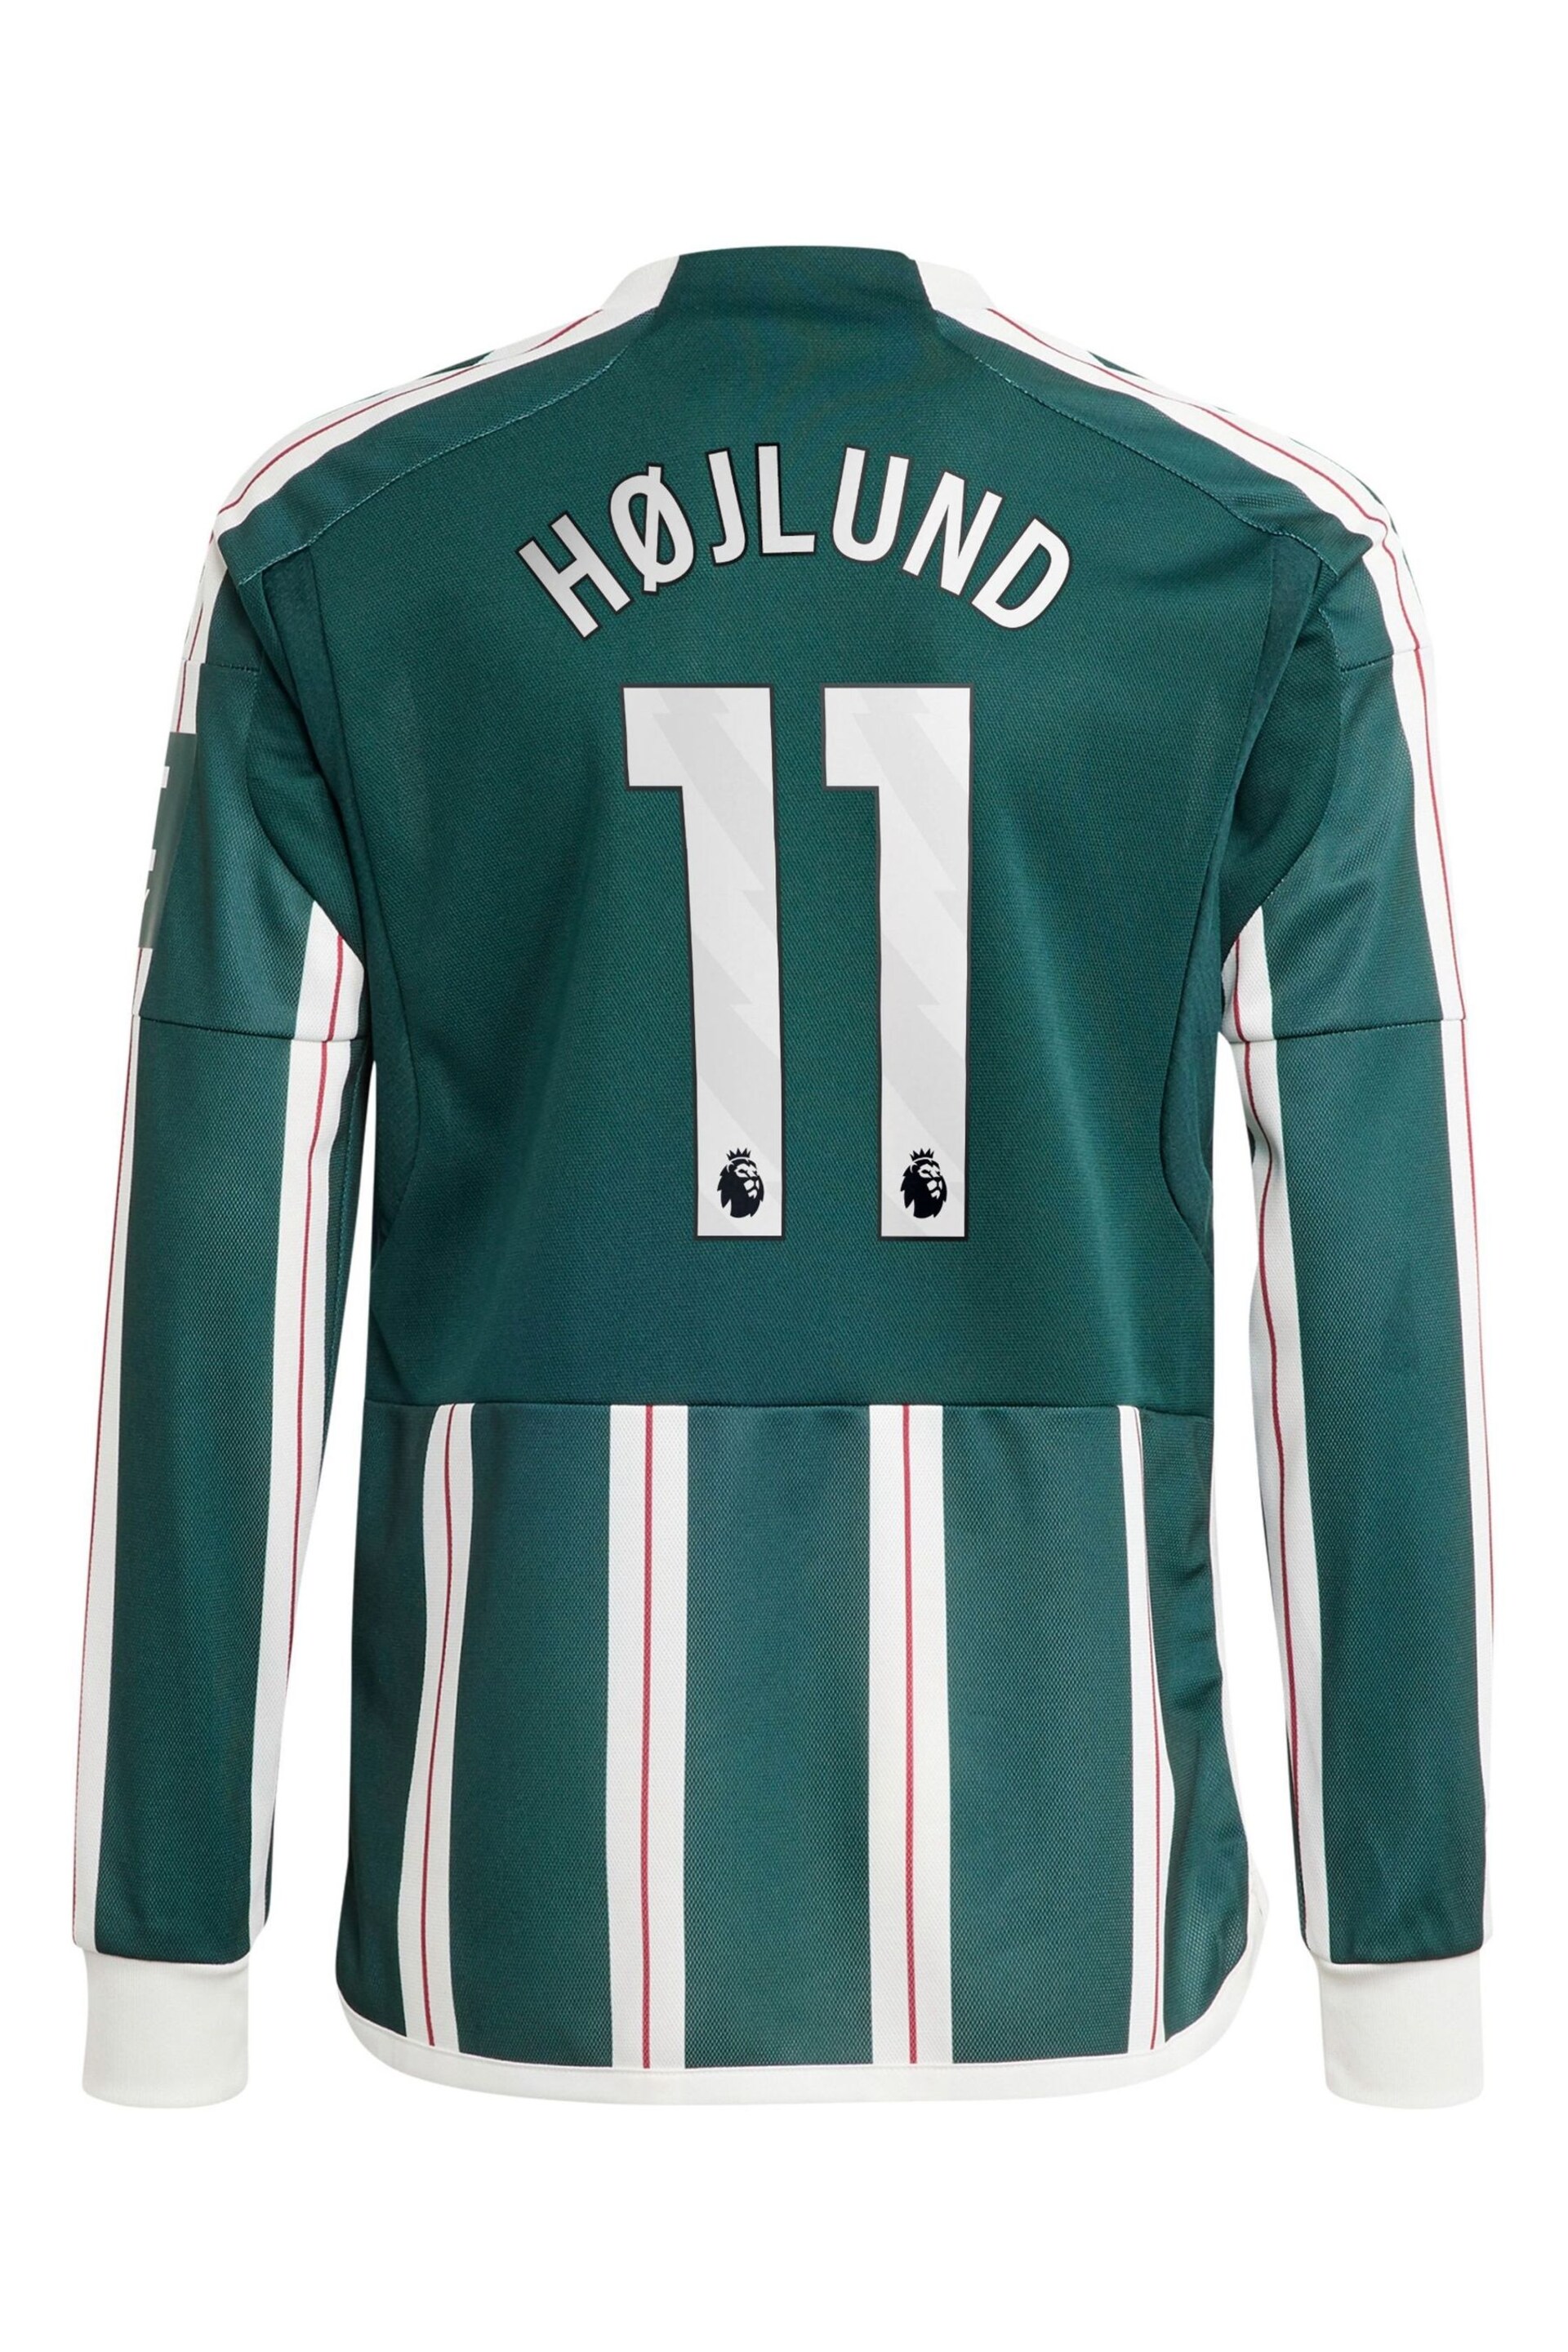 adidas Green Manchester United EPL Away Shirt 2023-24 - Hojlund 11 Kids - Image 3 of 3